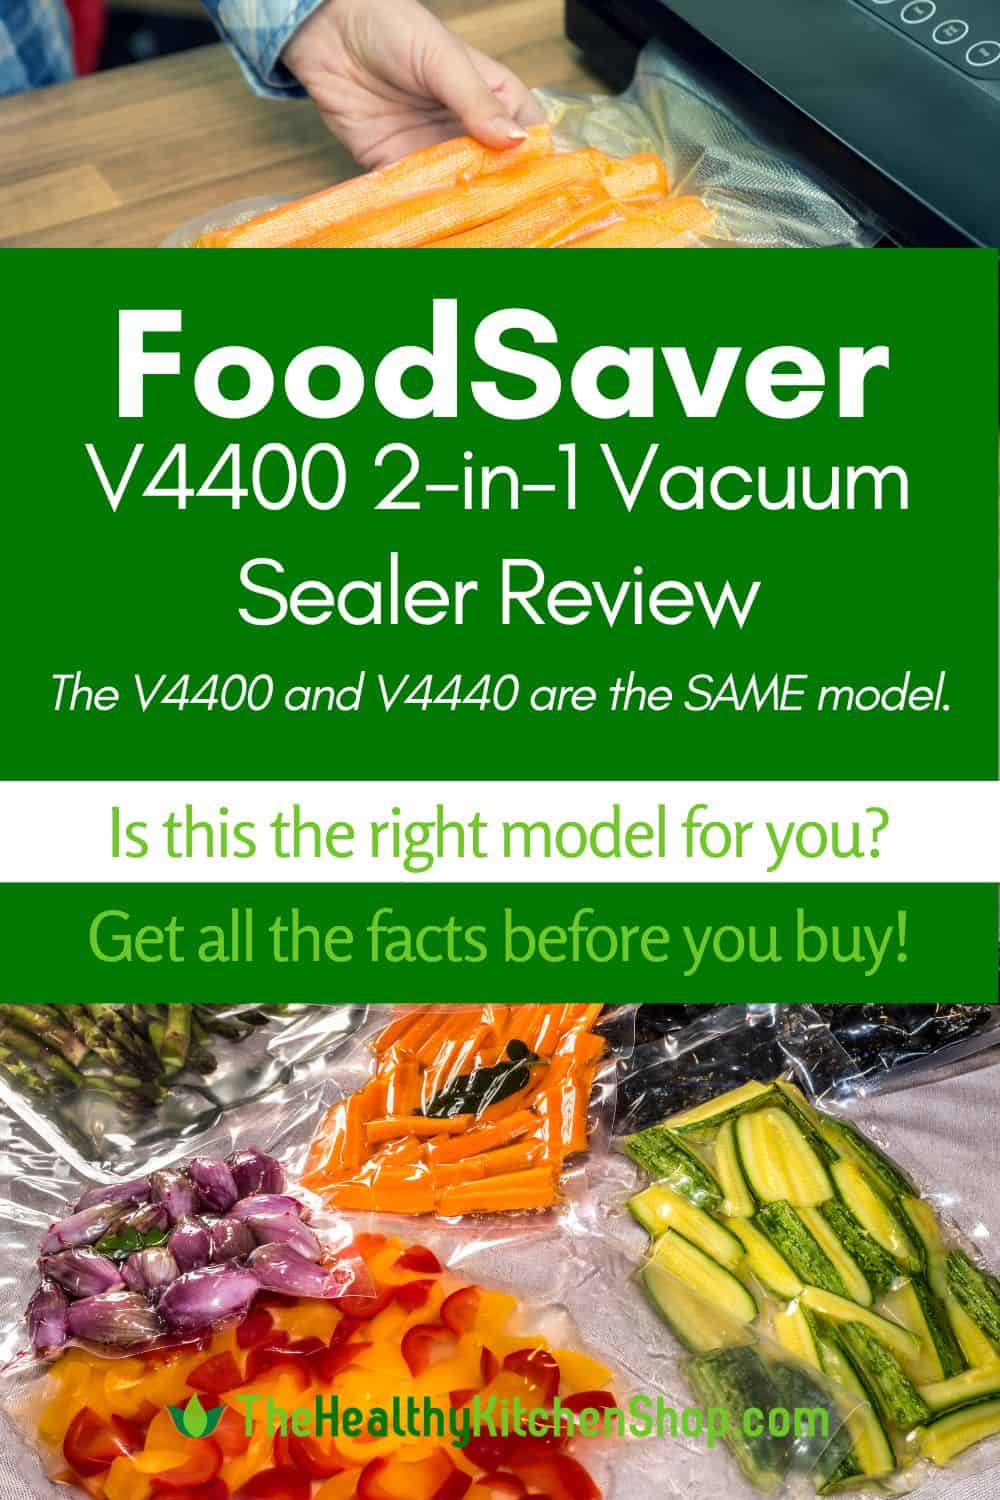 FoodSaver V4400 Vacuum Sealer Review